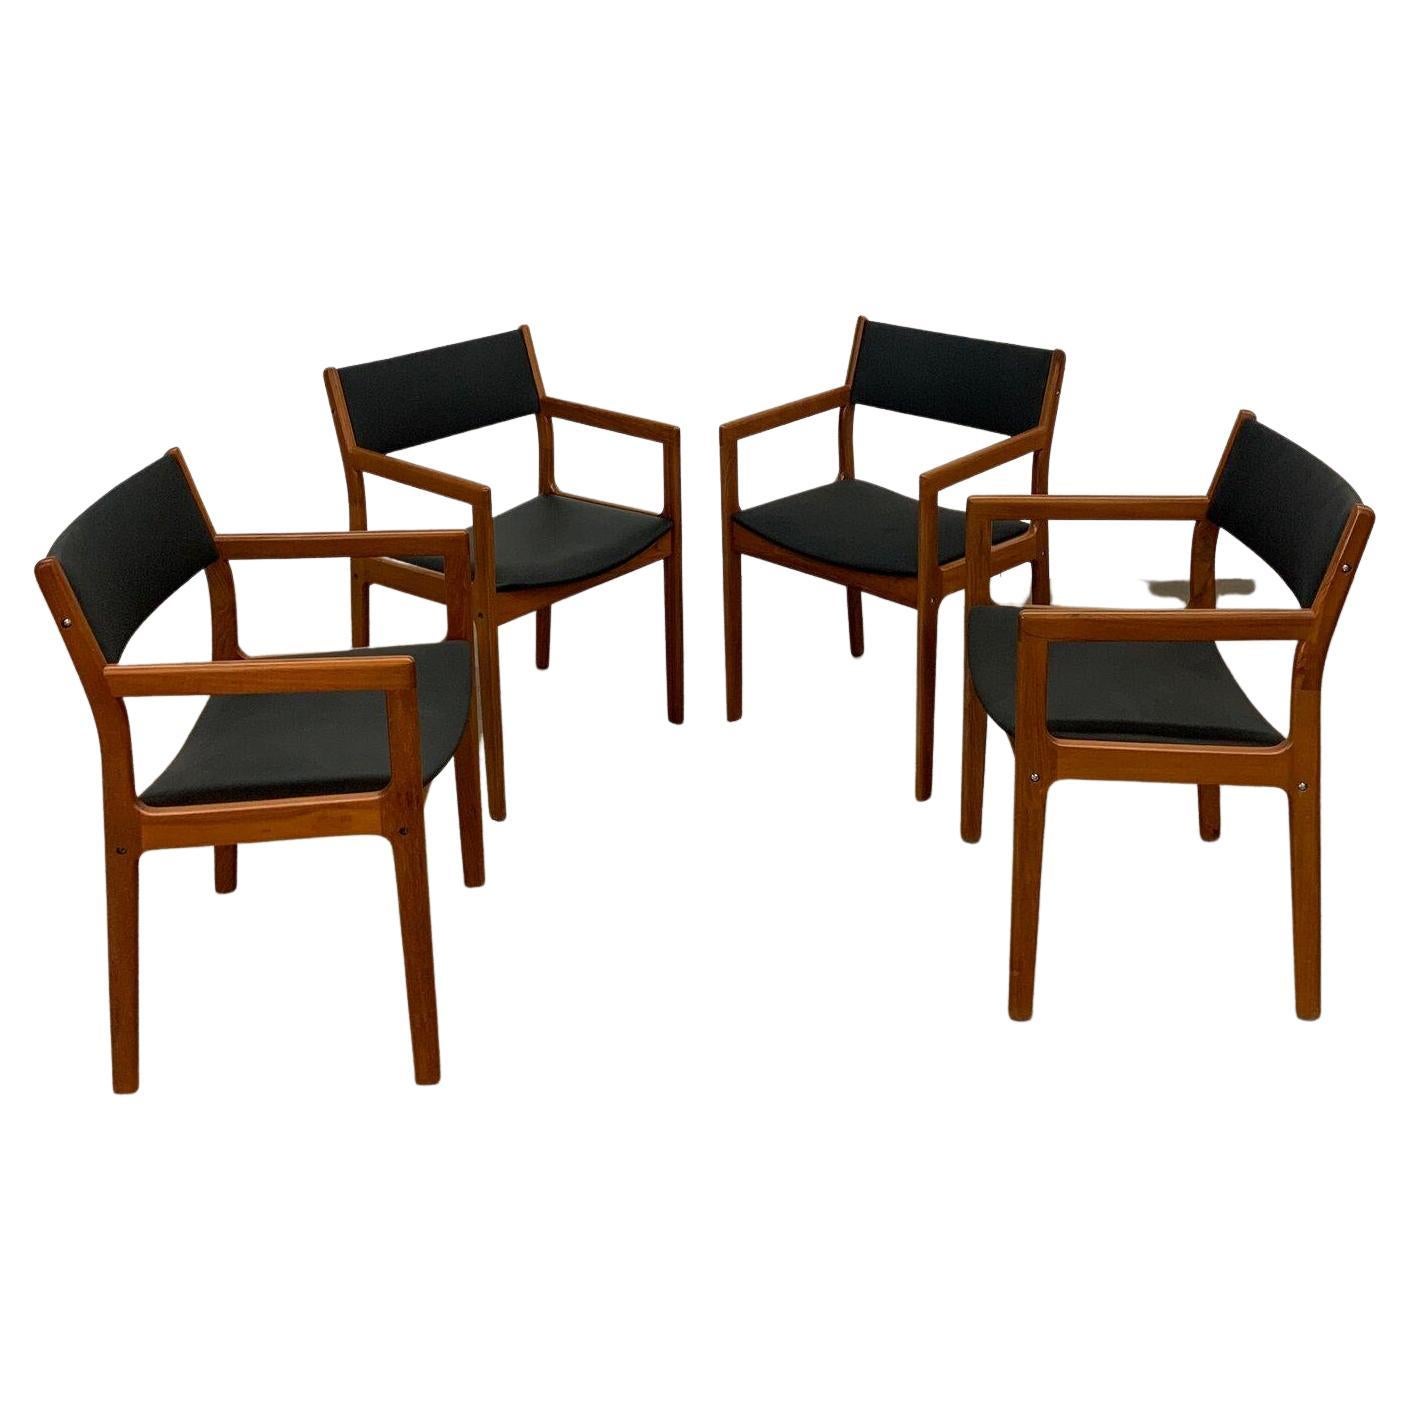 Danish Modern Teak Dining Chairs, Set of 4